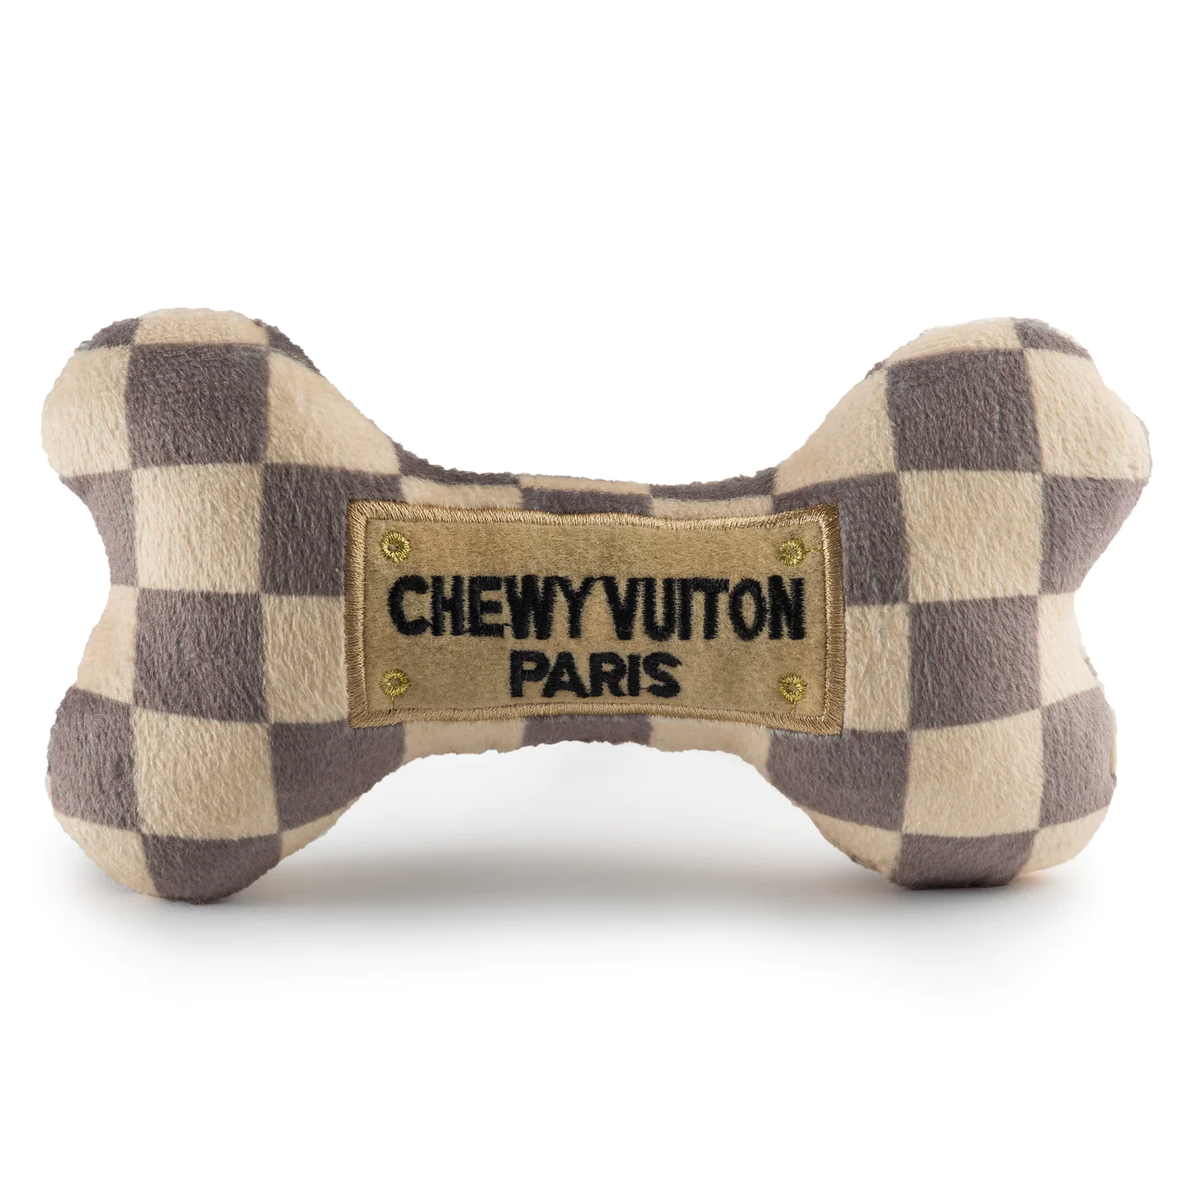 Checker Chewy Vuiton Bone Toy - Large